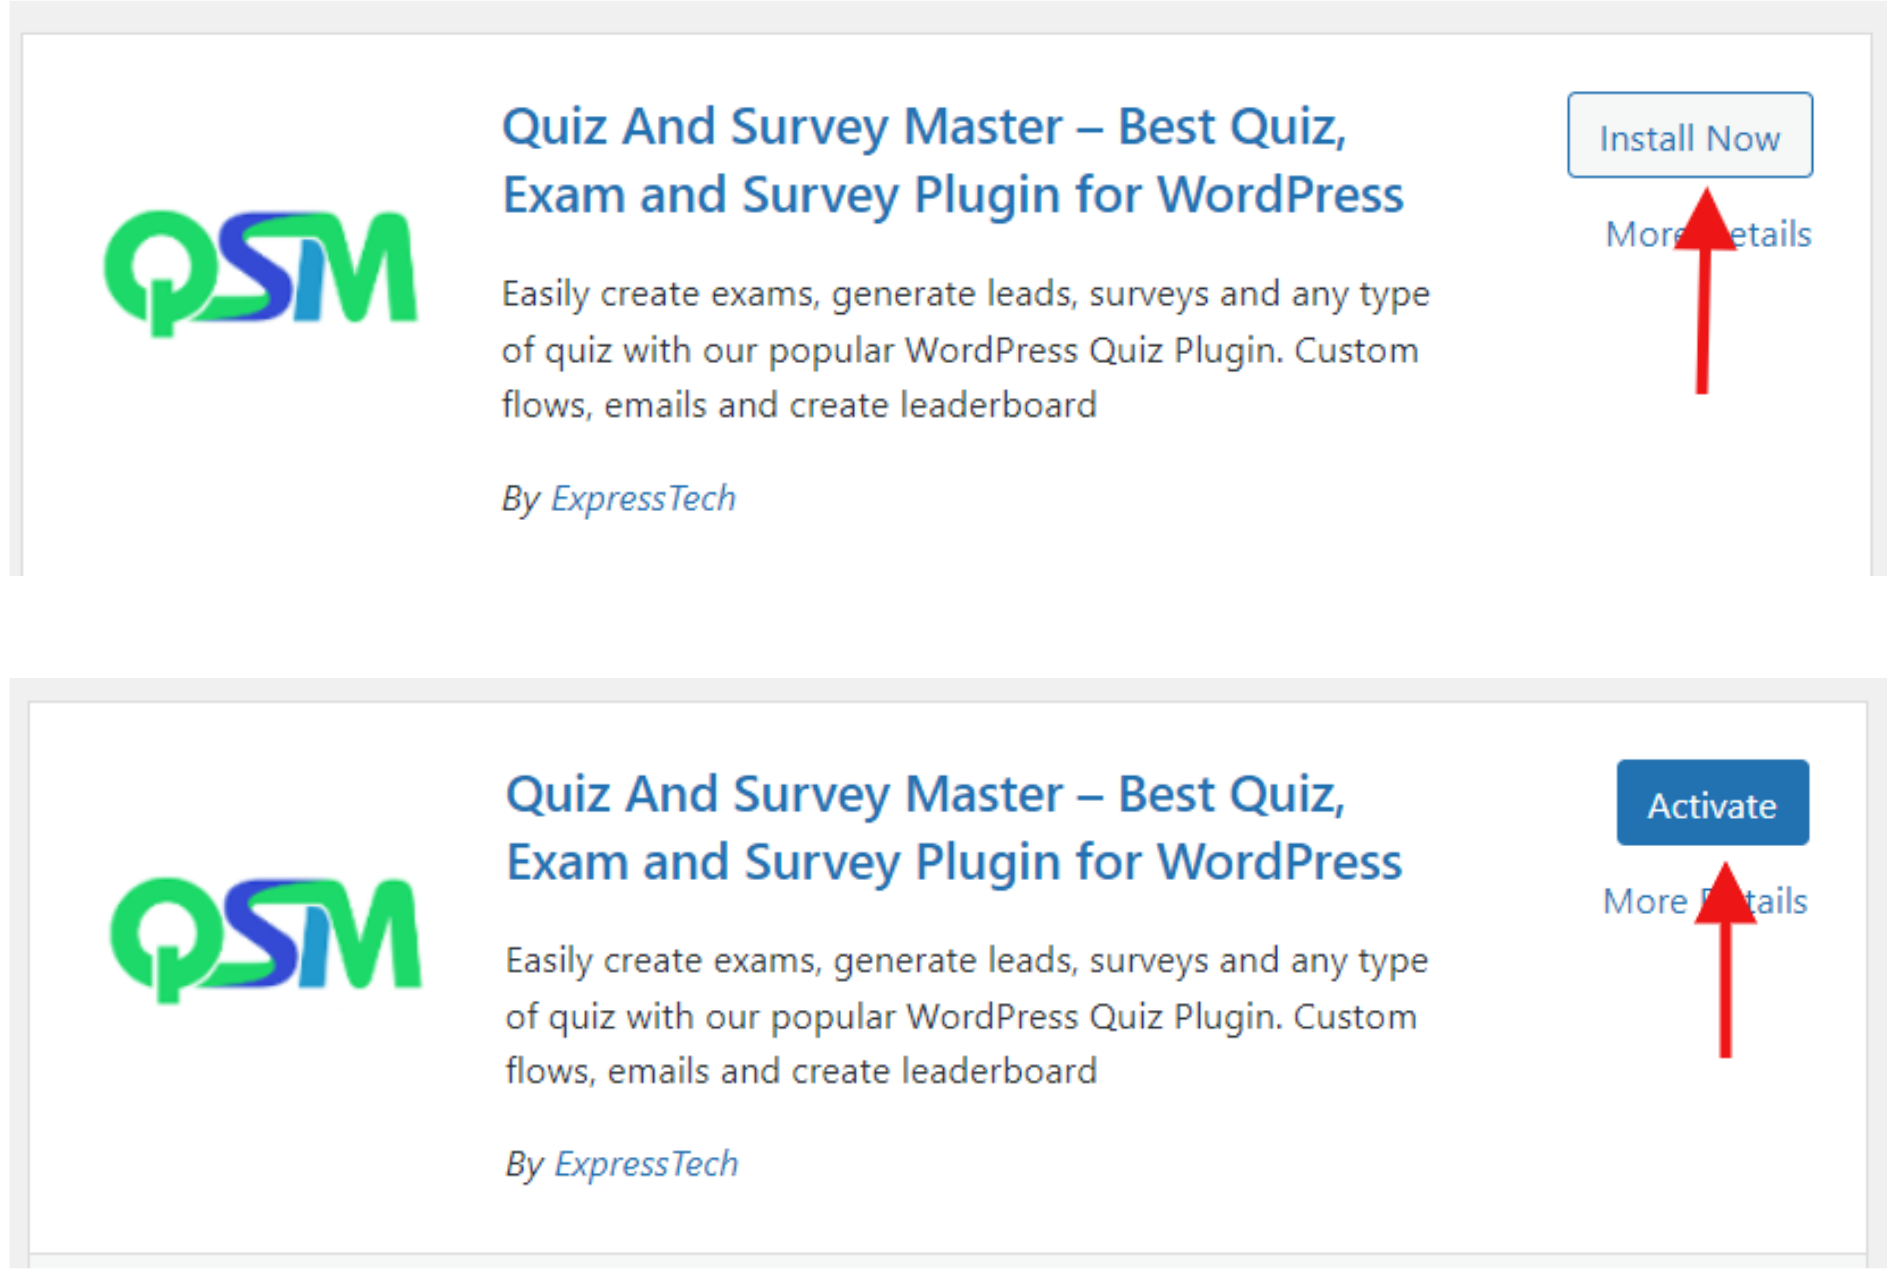 Create a quiz- Download and activate QSM